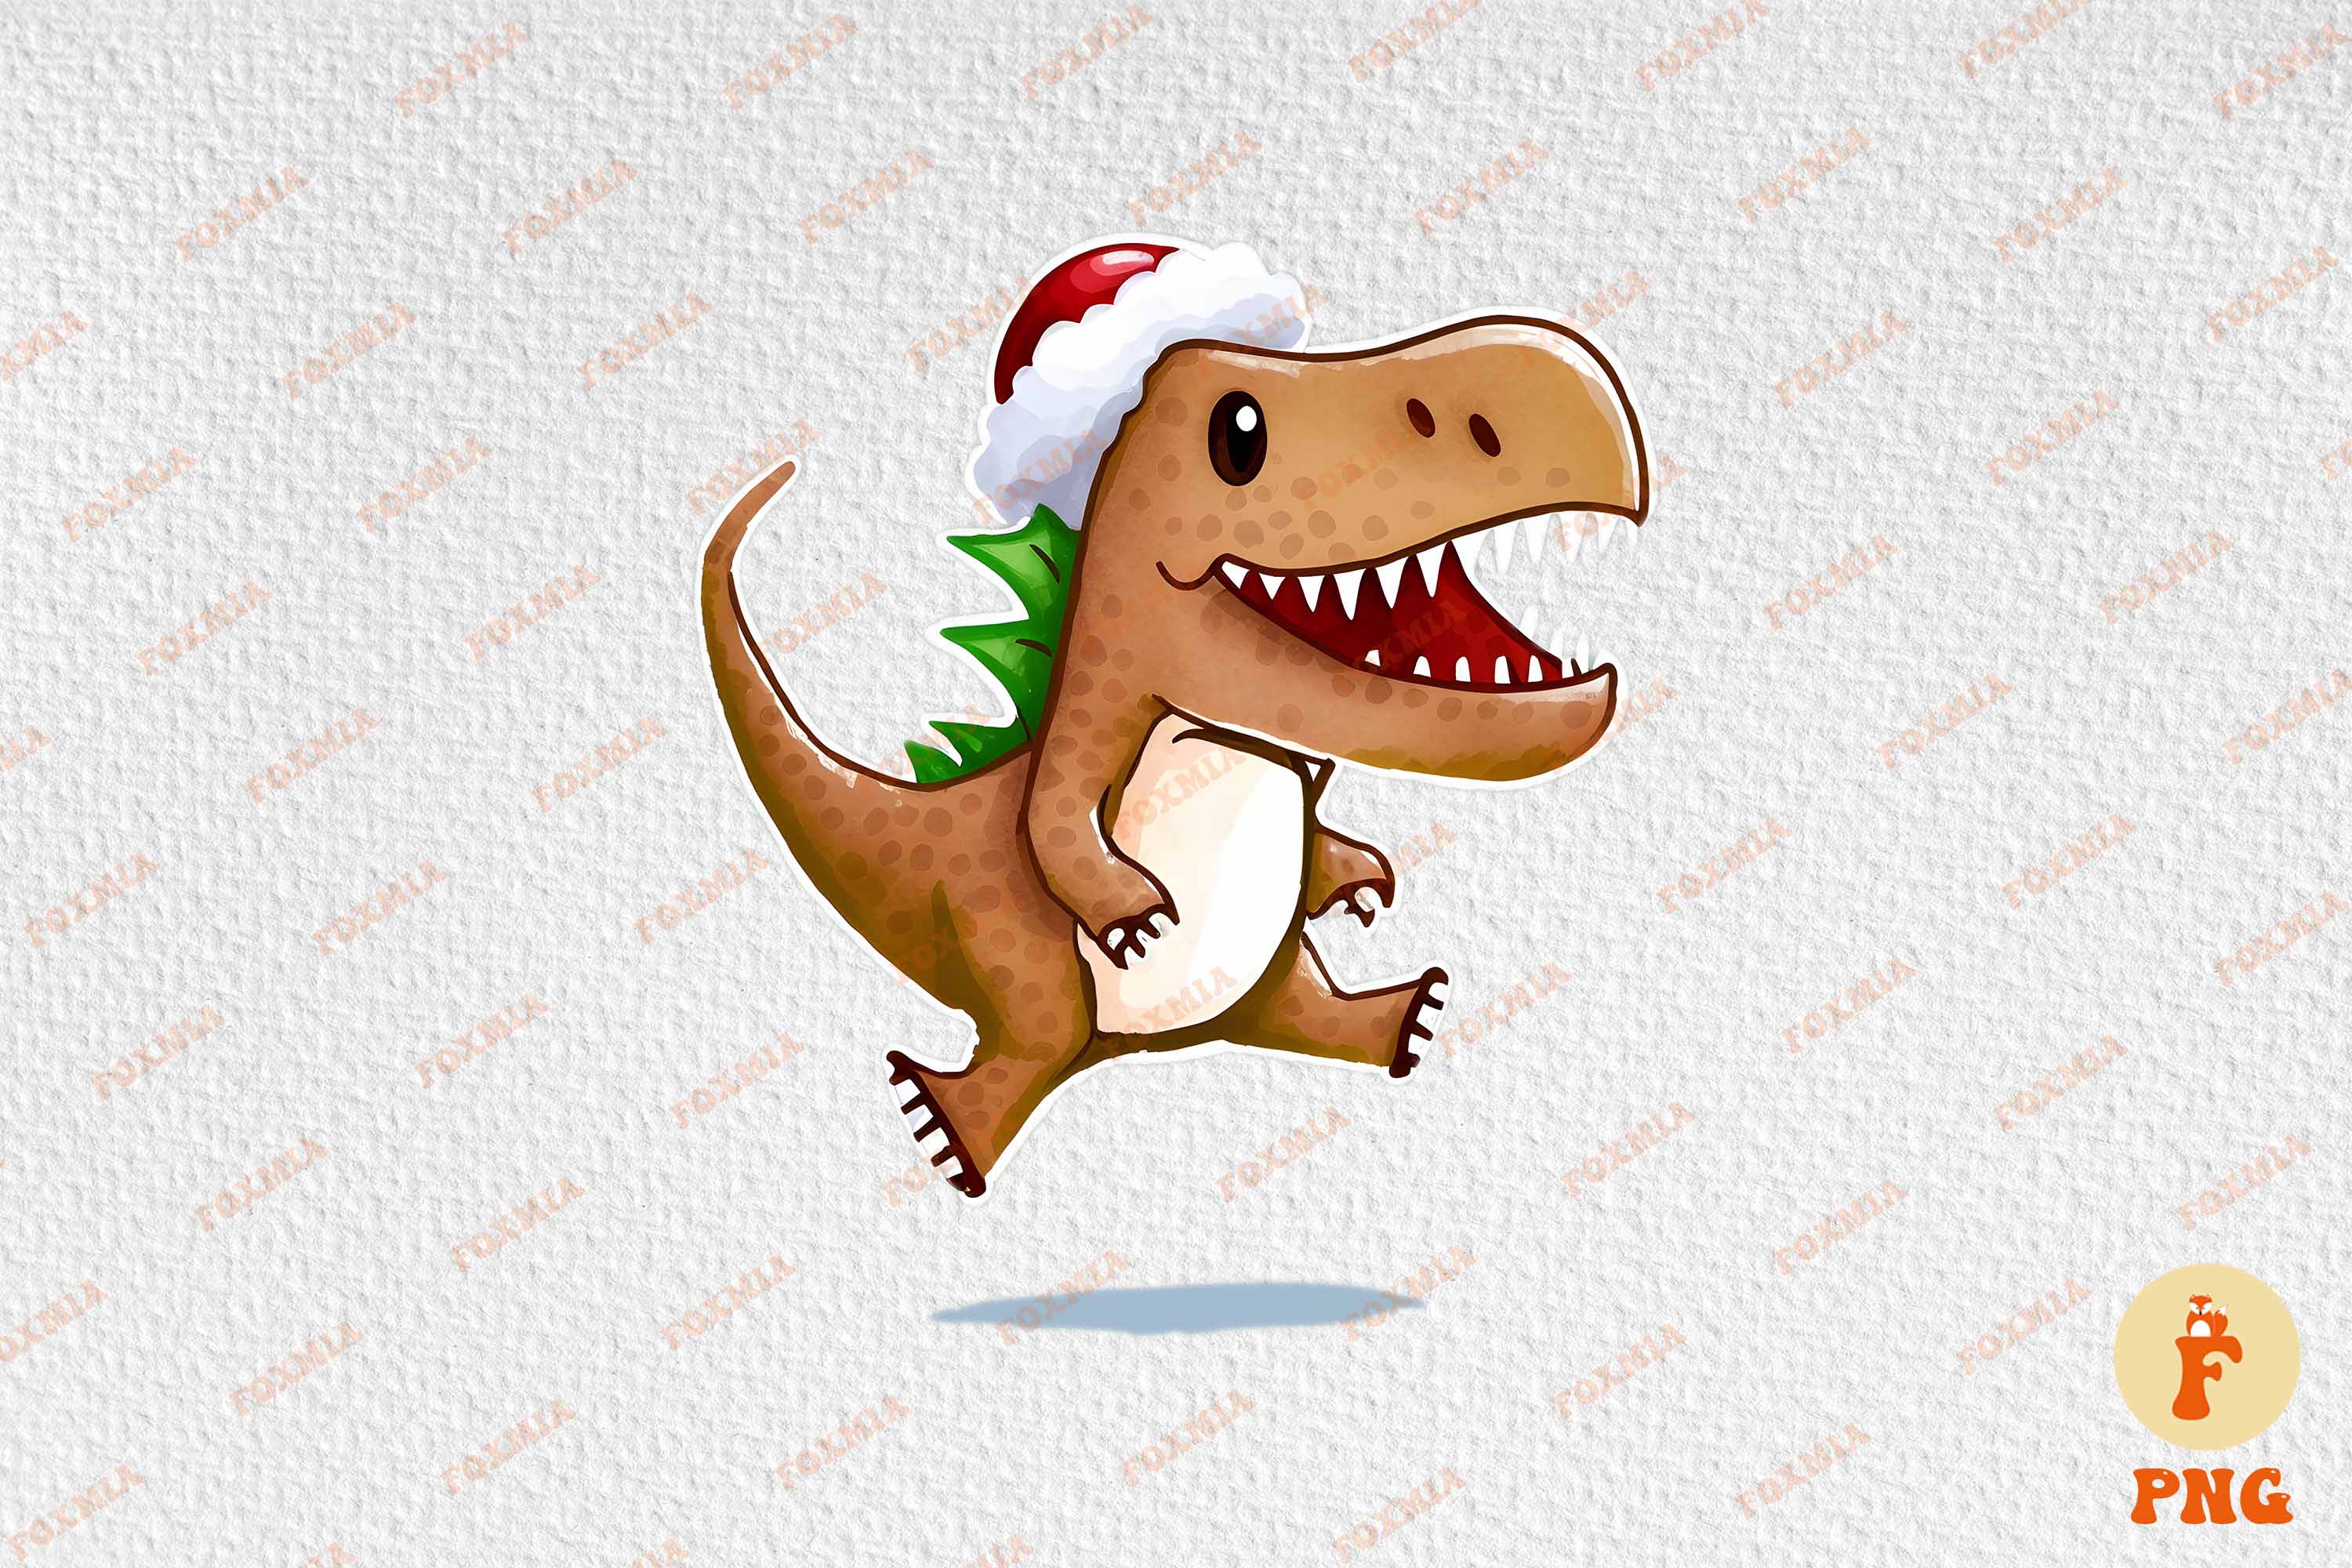 Amazing image of dinosaur wearing santa hat.